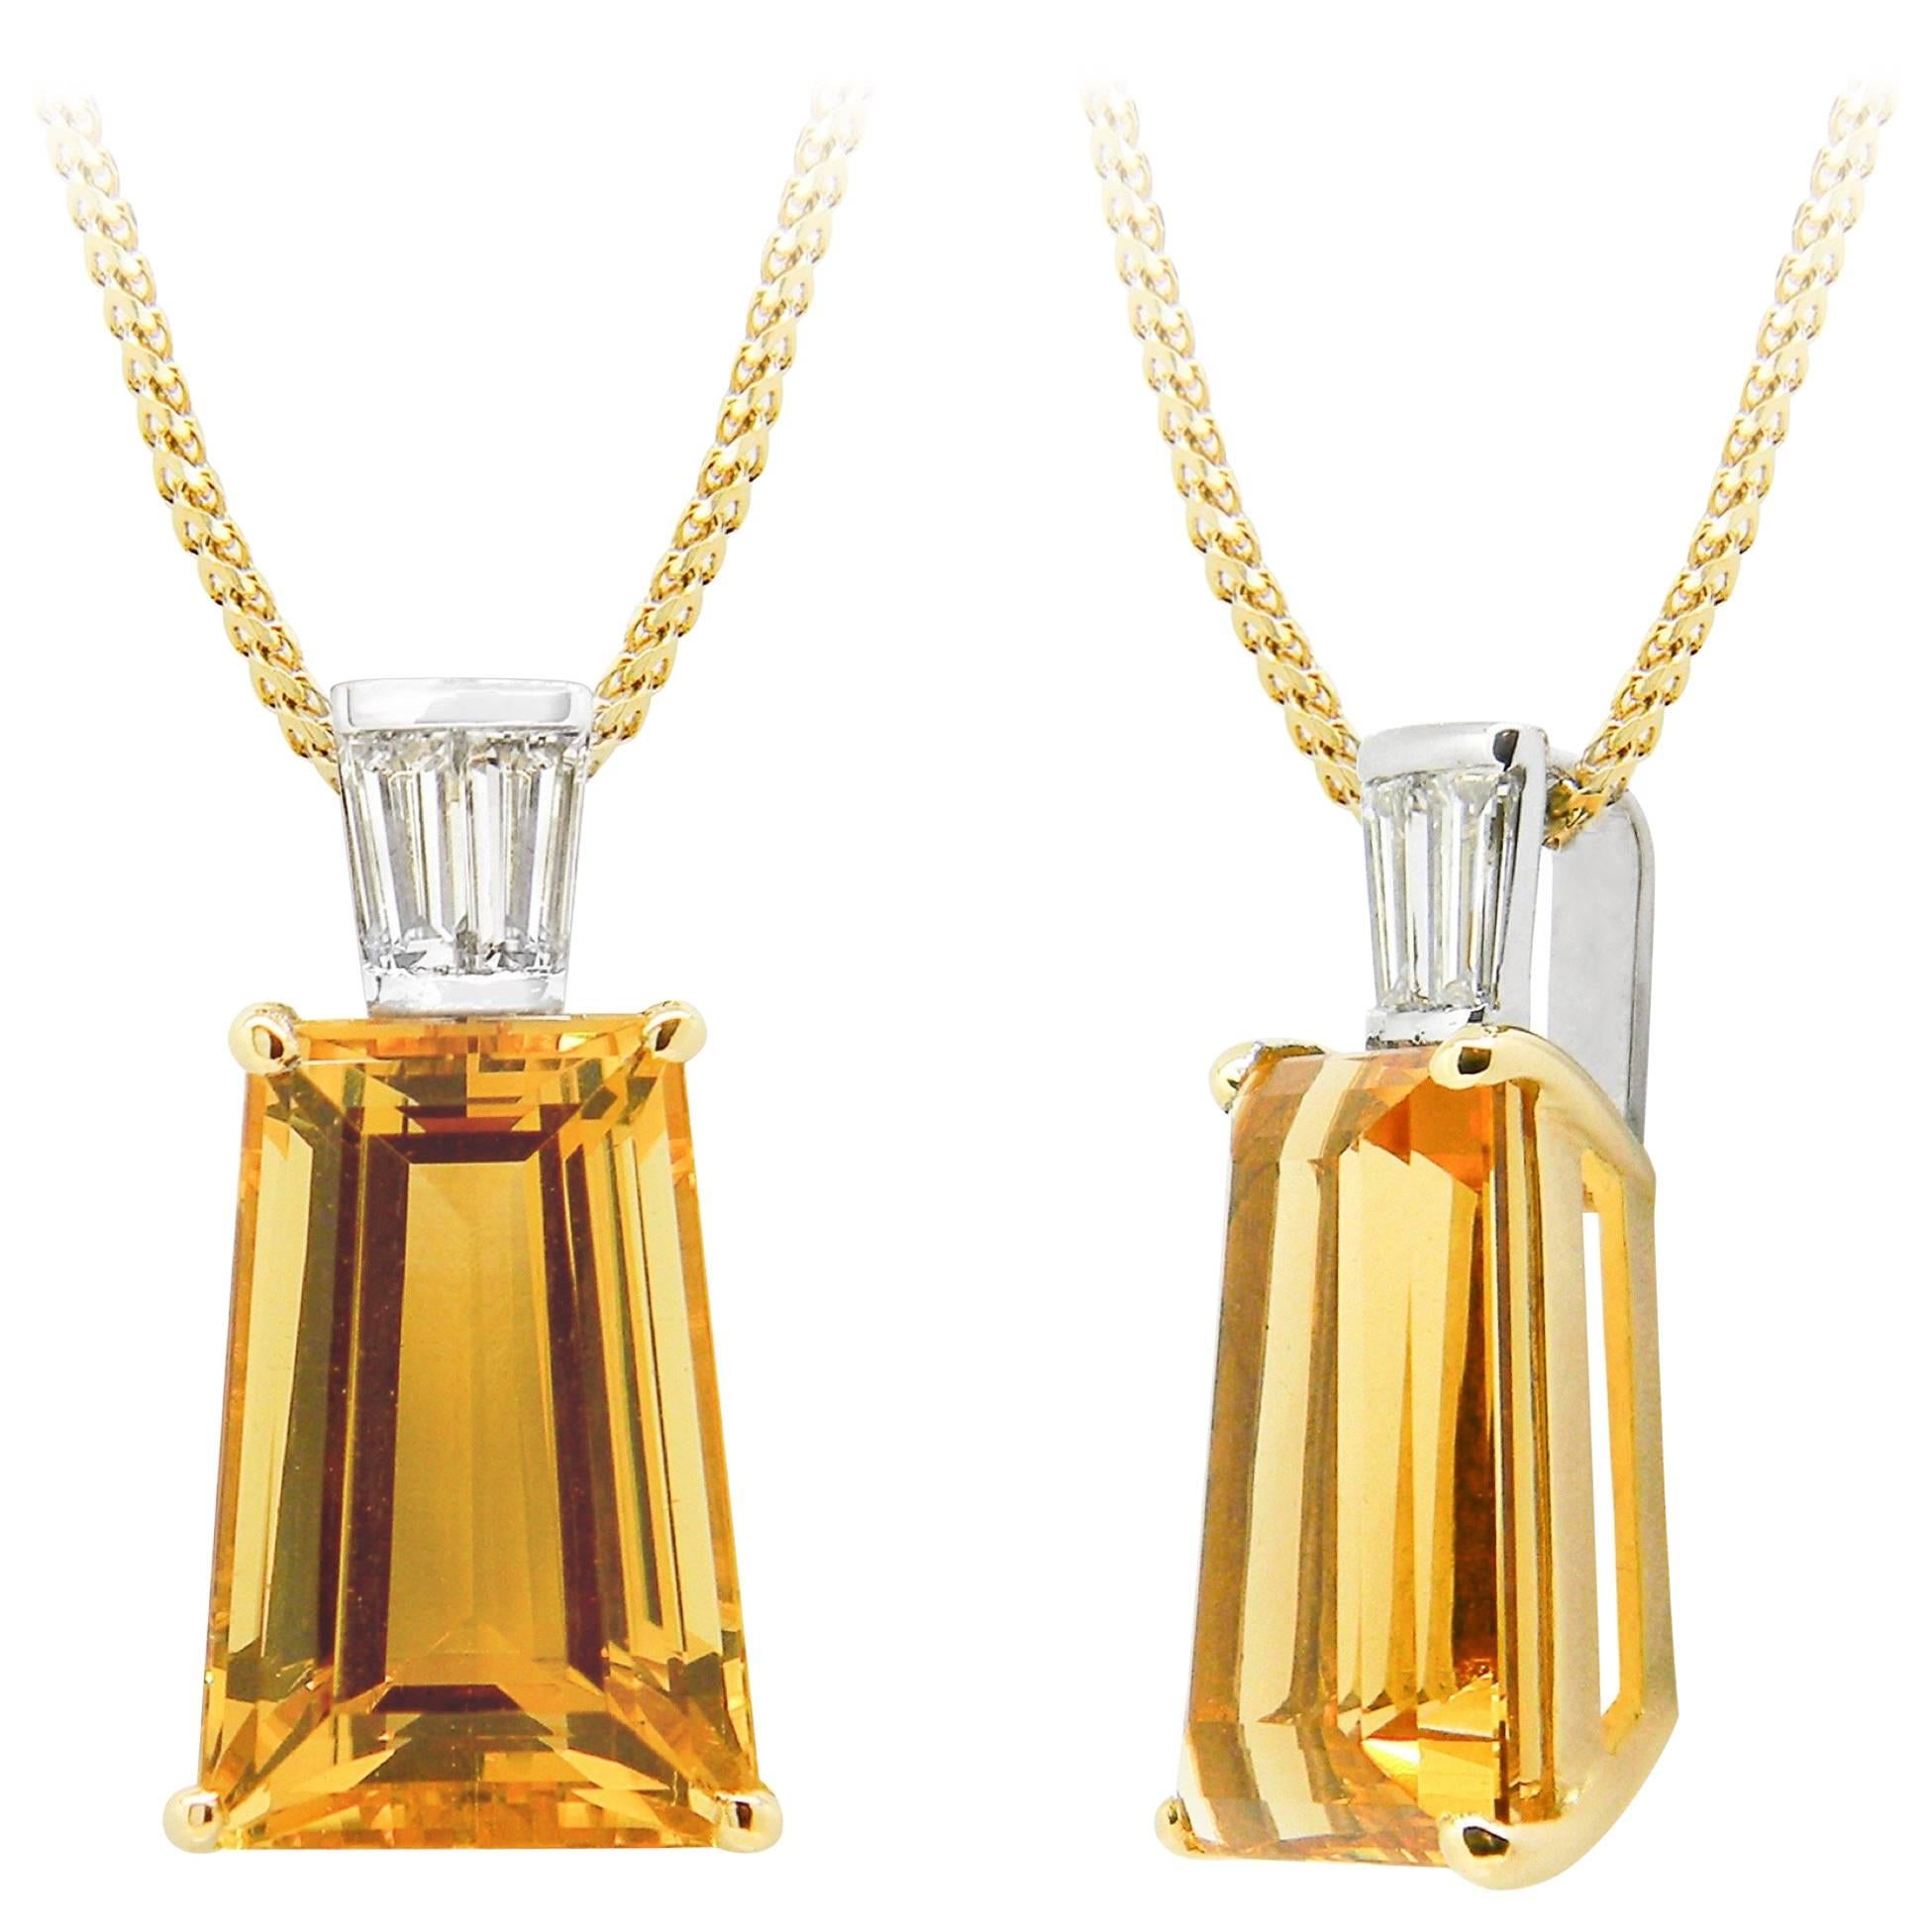 Superb 9.59ct Golden Beryl and Diamond Pendant For Sale